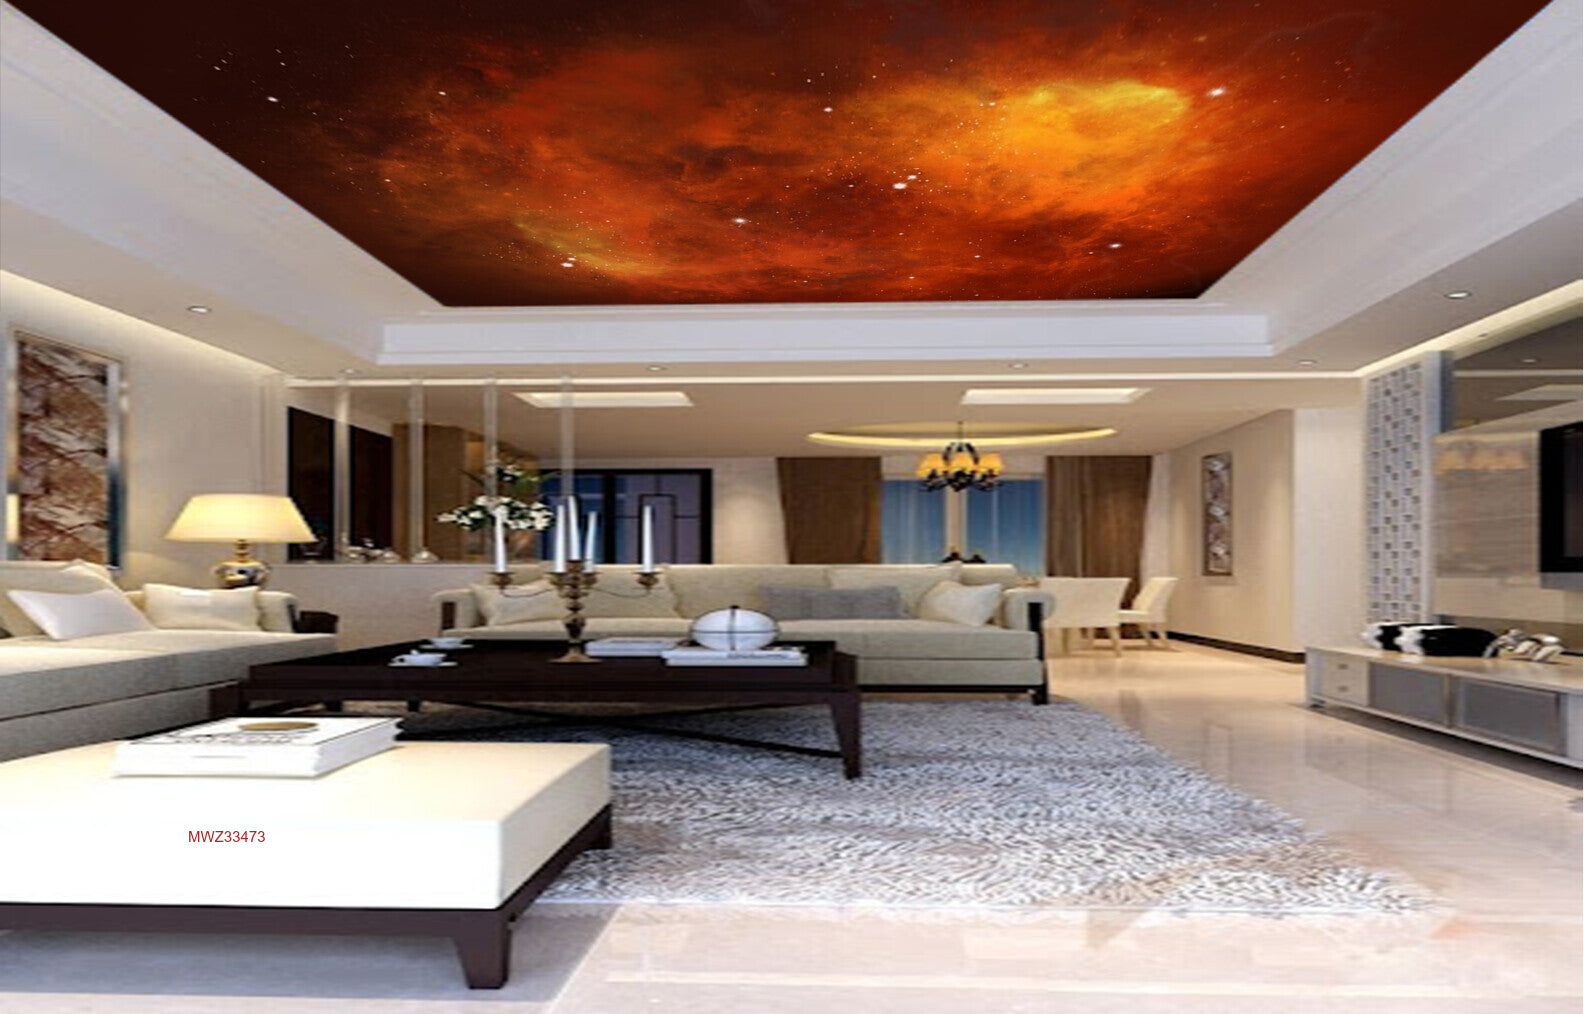 Avikalp MWZ3347 Stars Orange Red Galaxy HD Wallpaper for Ceiling